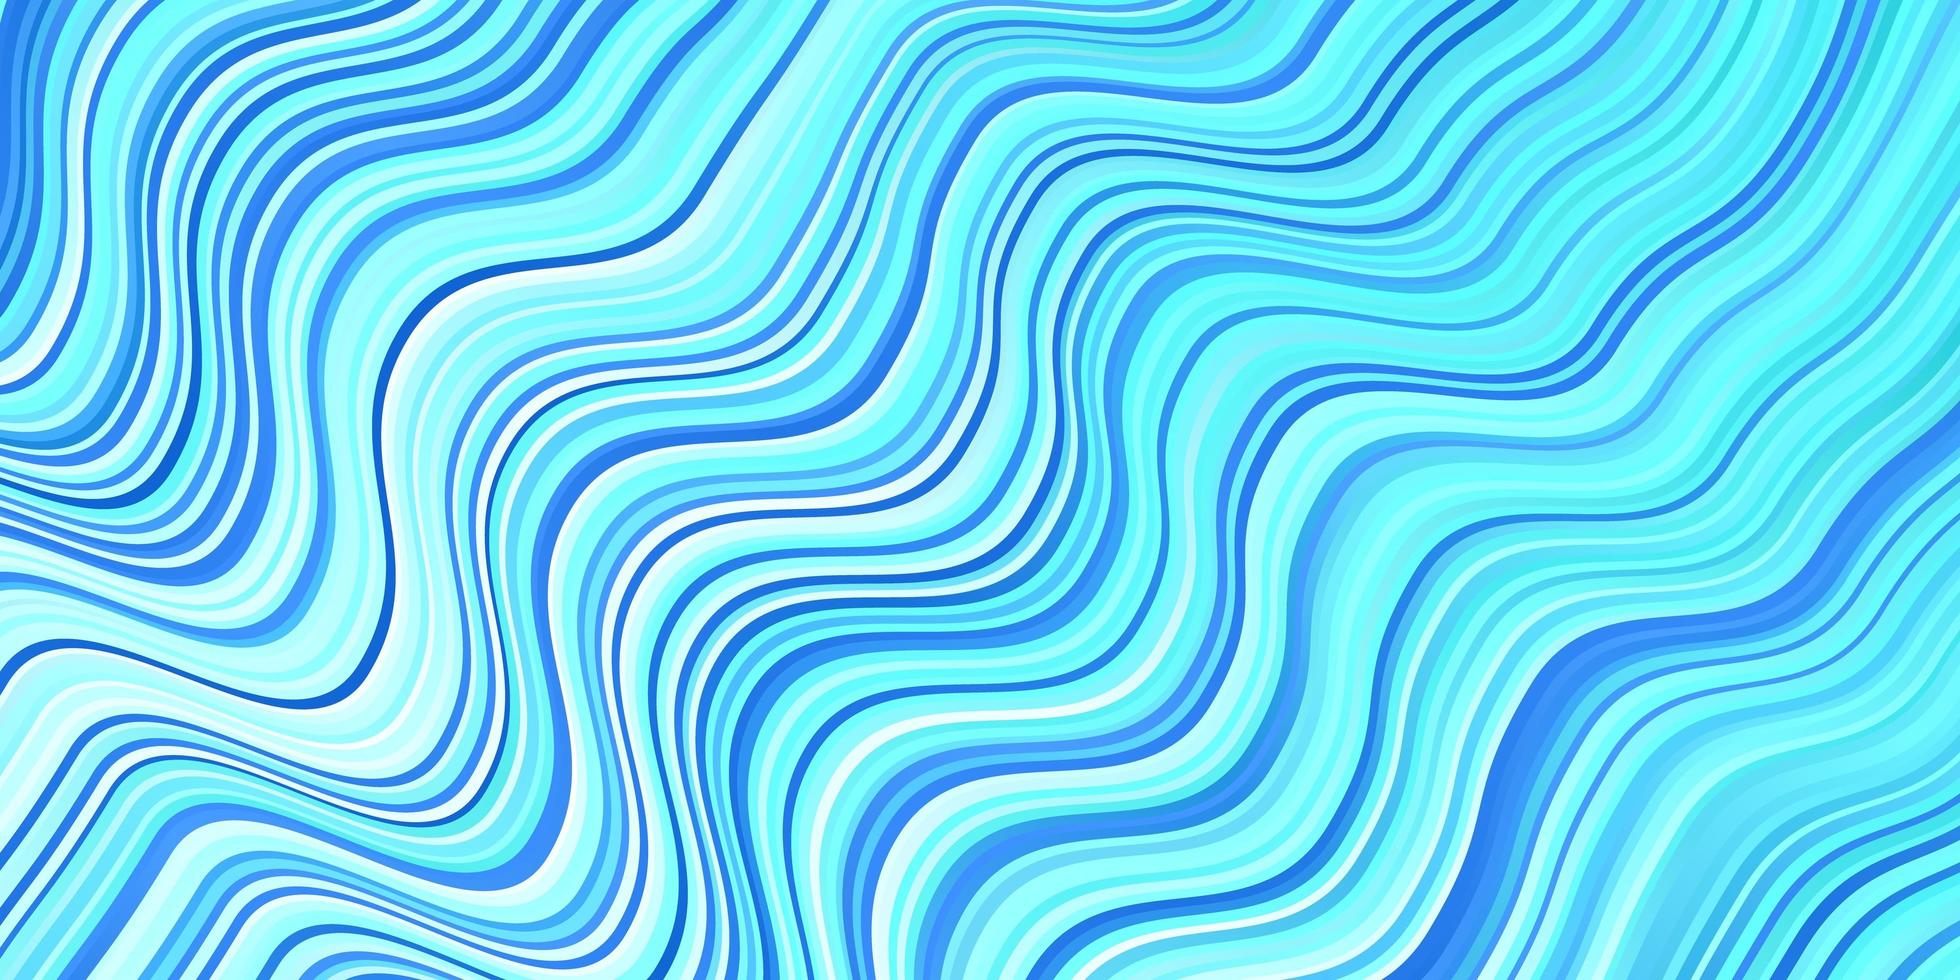 hellblaue Vektorschablone mit Linien vektor